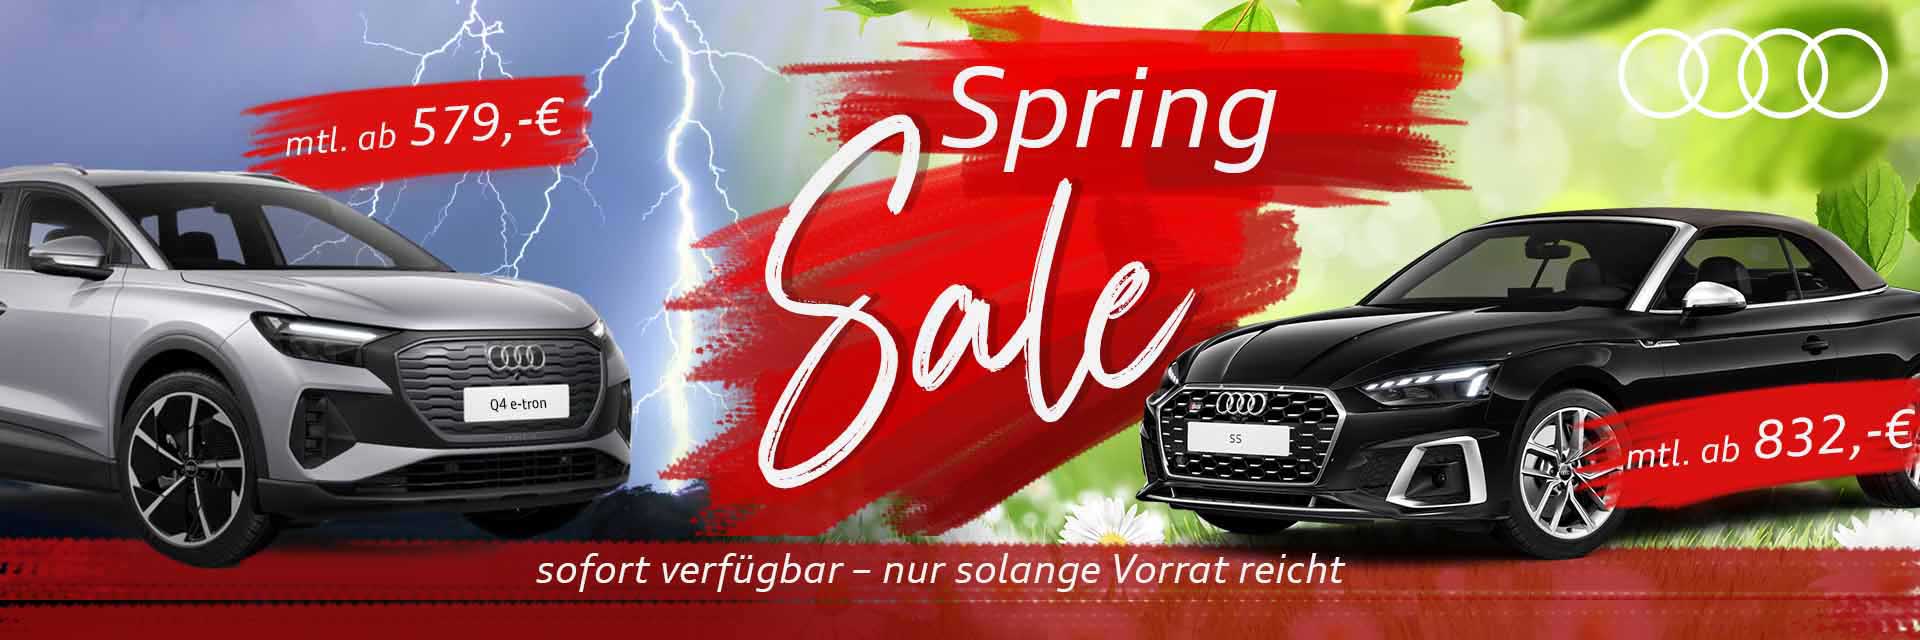 Audi Spring Sale